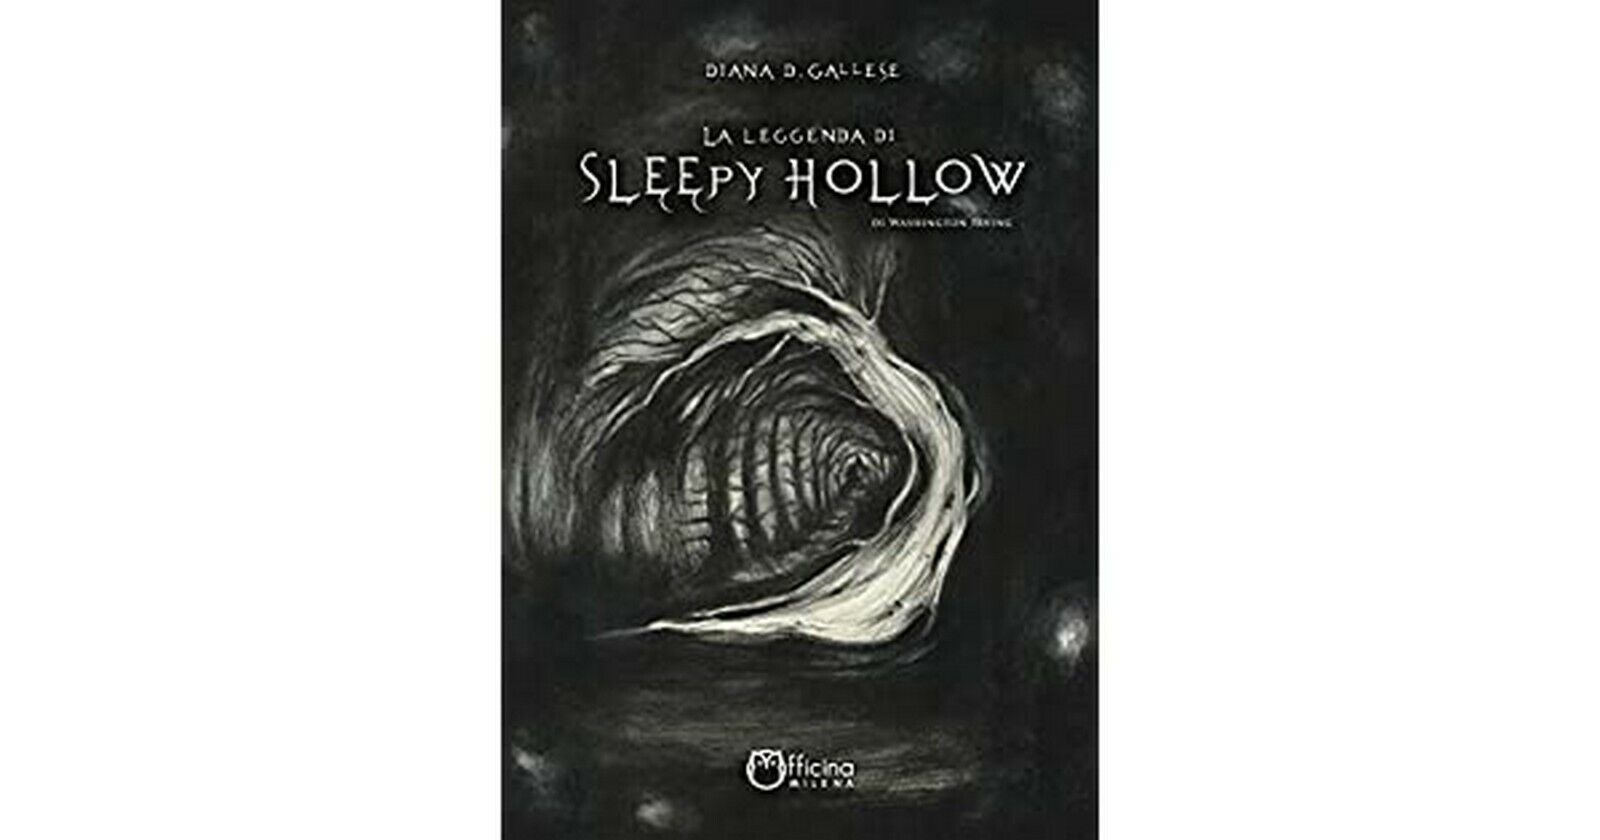 La leggenda di Sleepy Hollow  di Diana D. Gallese,  Officina Milena libro usato